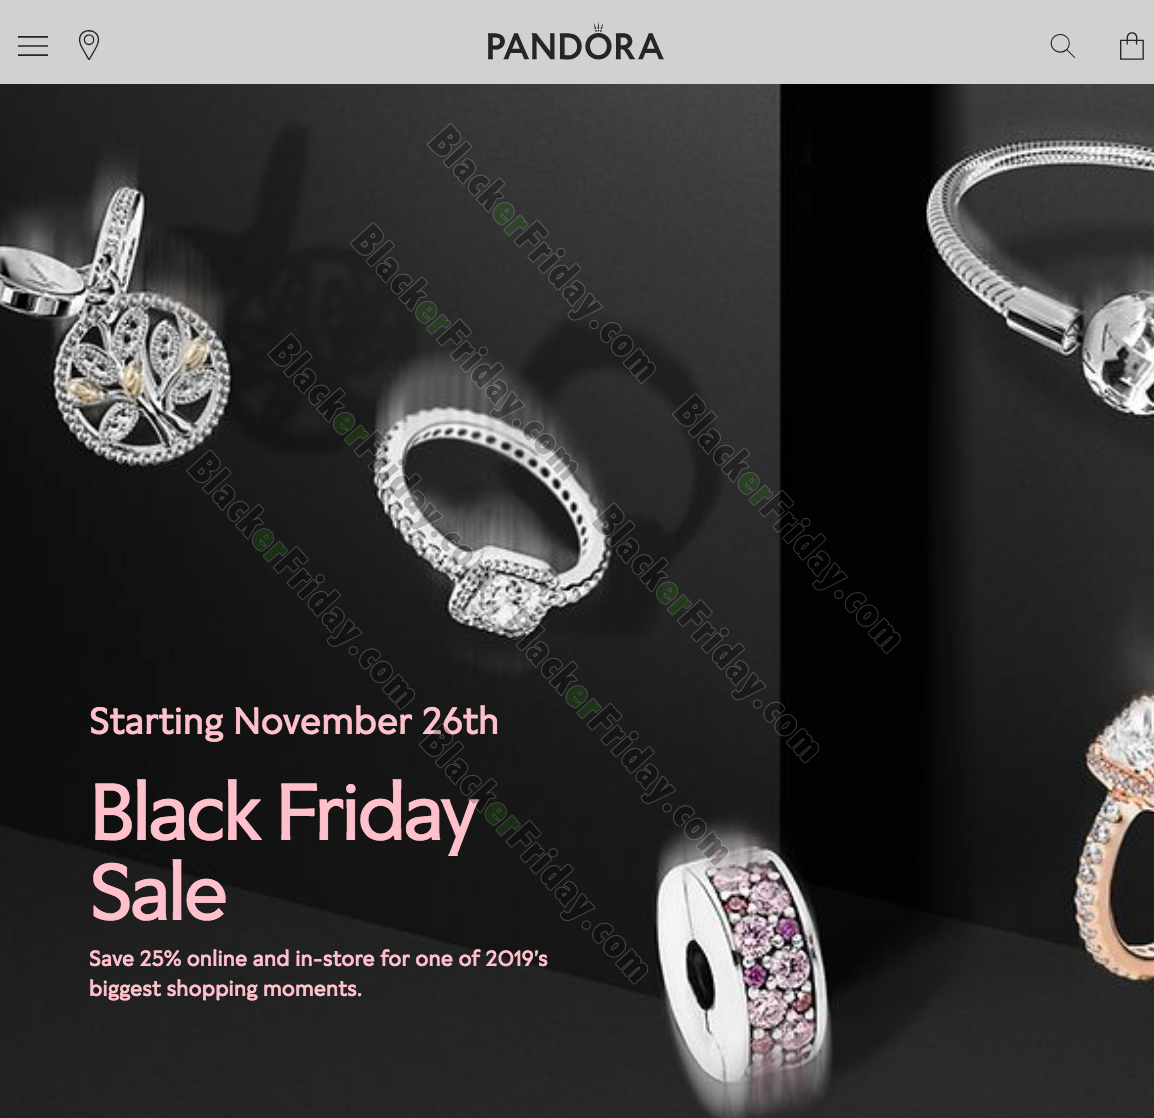 Pandora Black Friday 2021 Sale & Holiday Charms - Blacker Friday - What Is The Pandora Charm For Black Friday